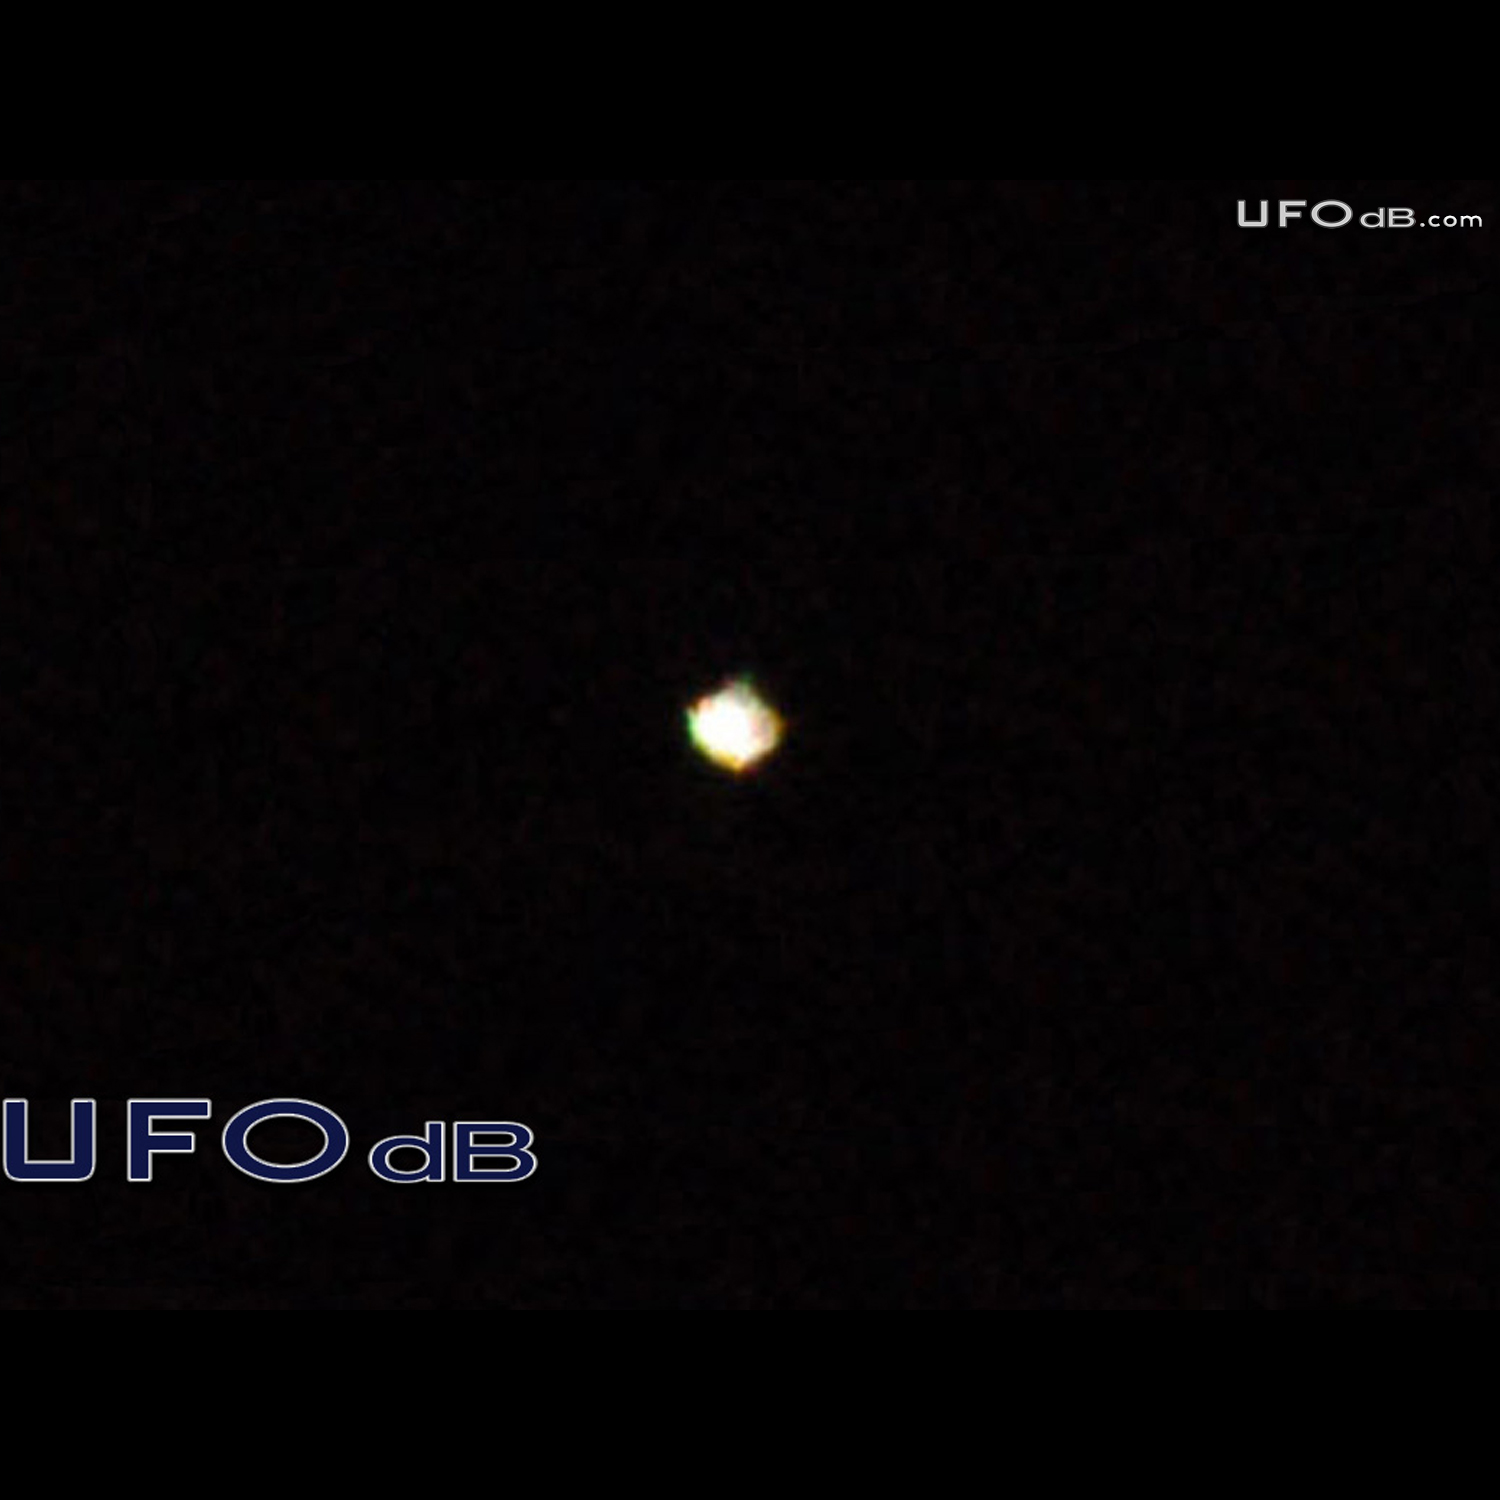 Icosahedron UFO with colored lights | Minnesota USA | February 21 2011 UFO Picture #331-2